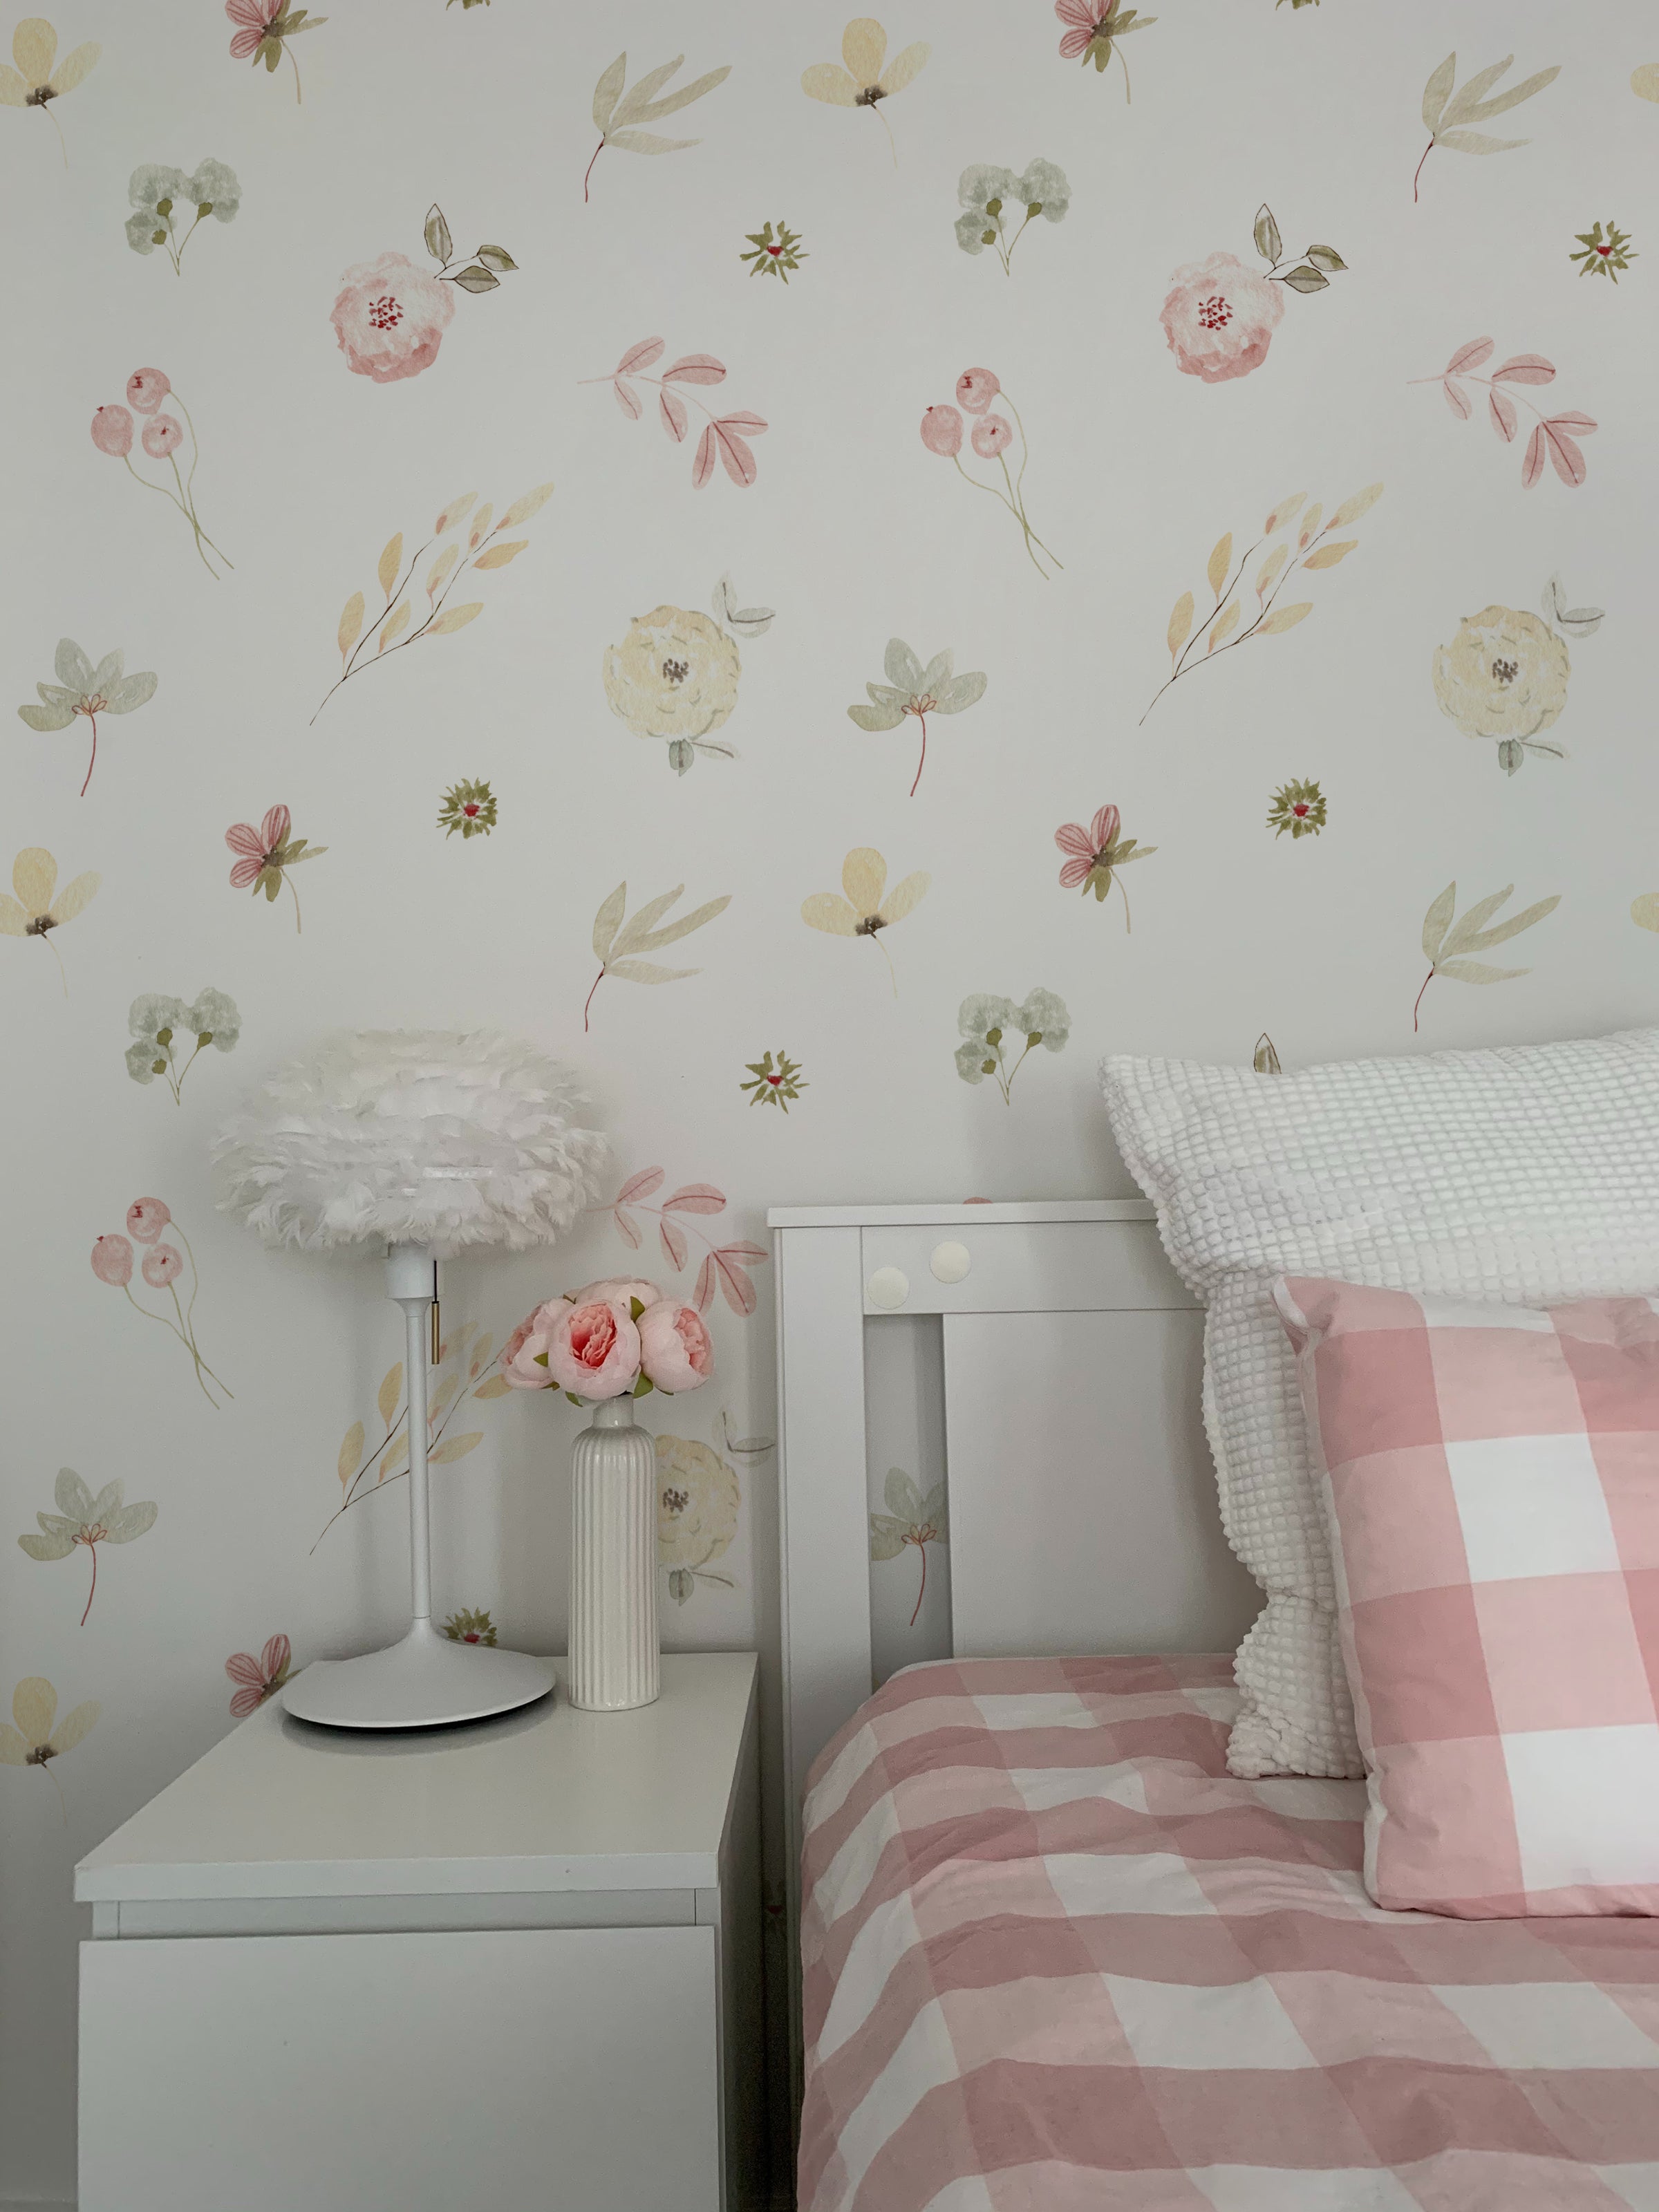 wallpaper, peel and stick wallpaper, Home decor, Pink wallpaper, watercolor wallpaper,  Pink watercolor floral wallpaper, bedroom wallpaper, kids room wallpaper, 